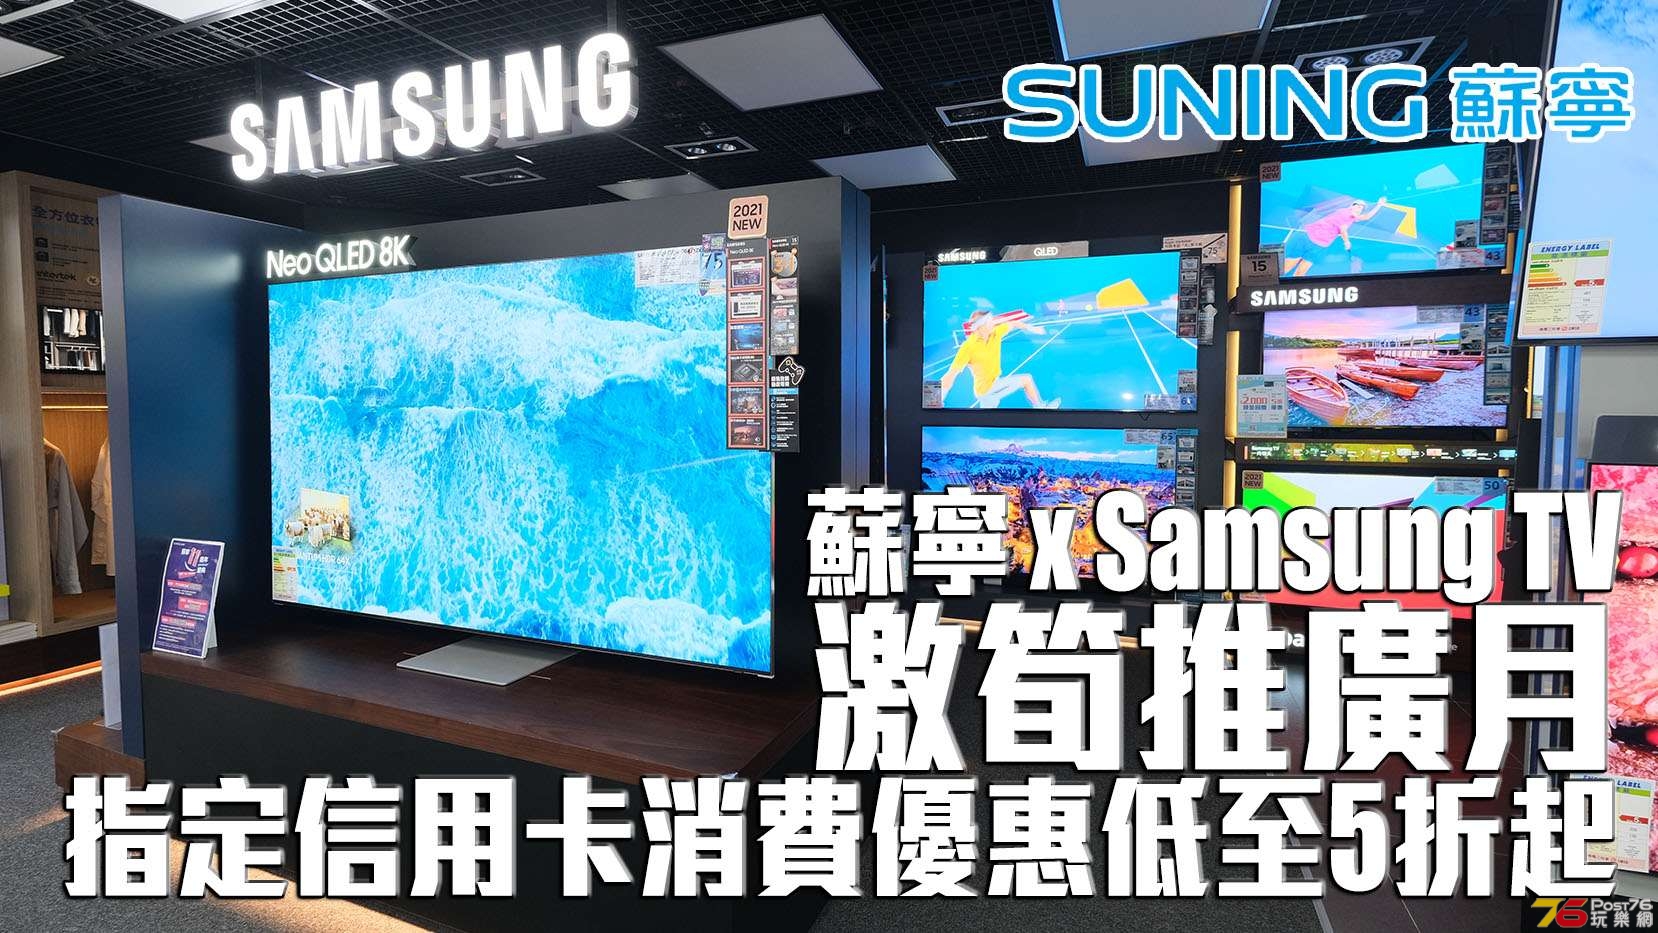 suning_samsung_tv_promoting-2.jpg